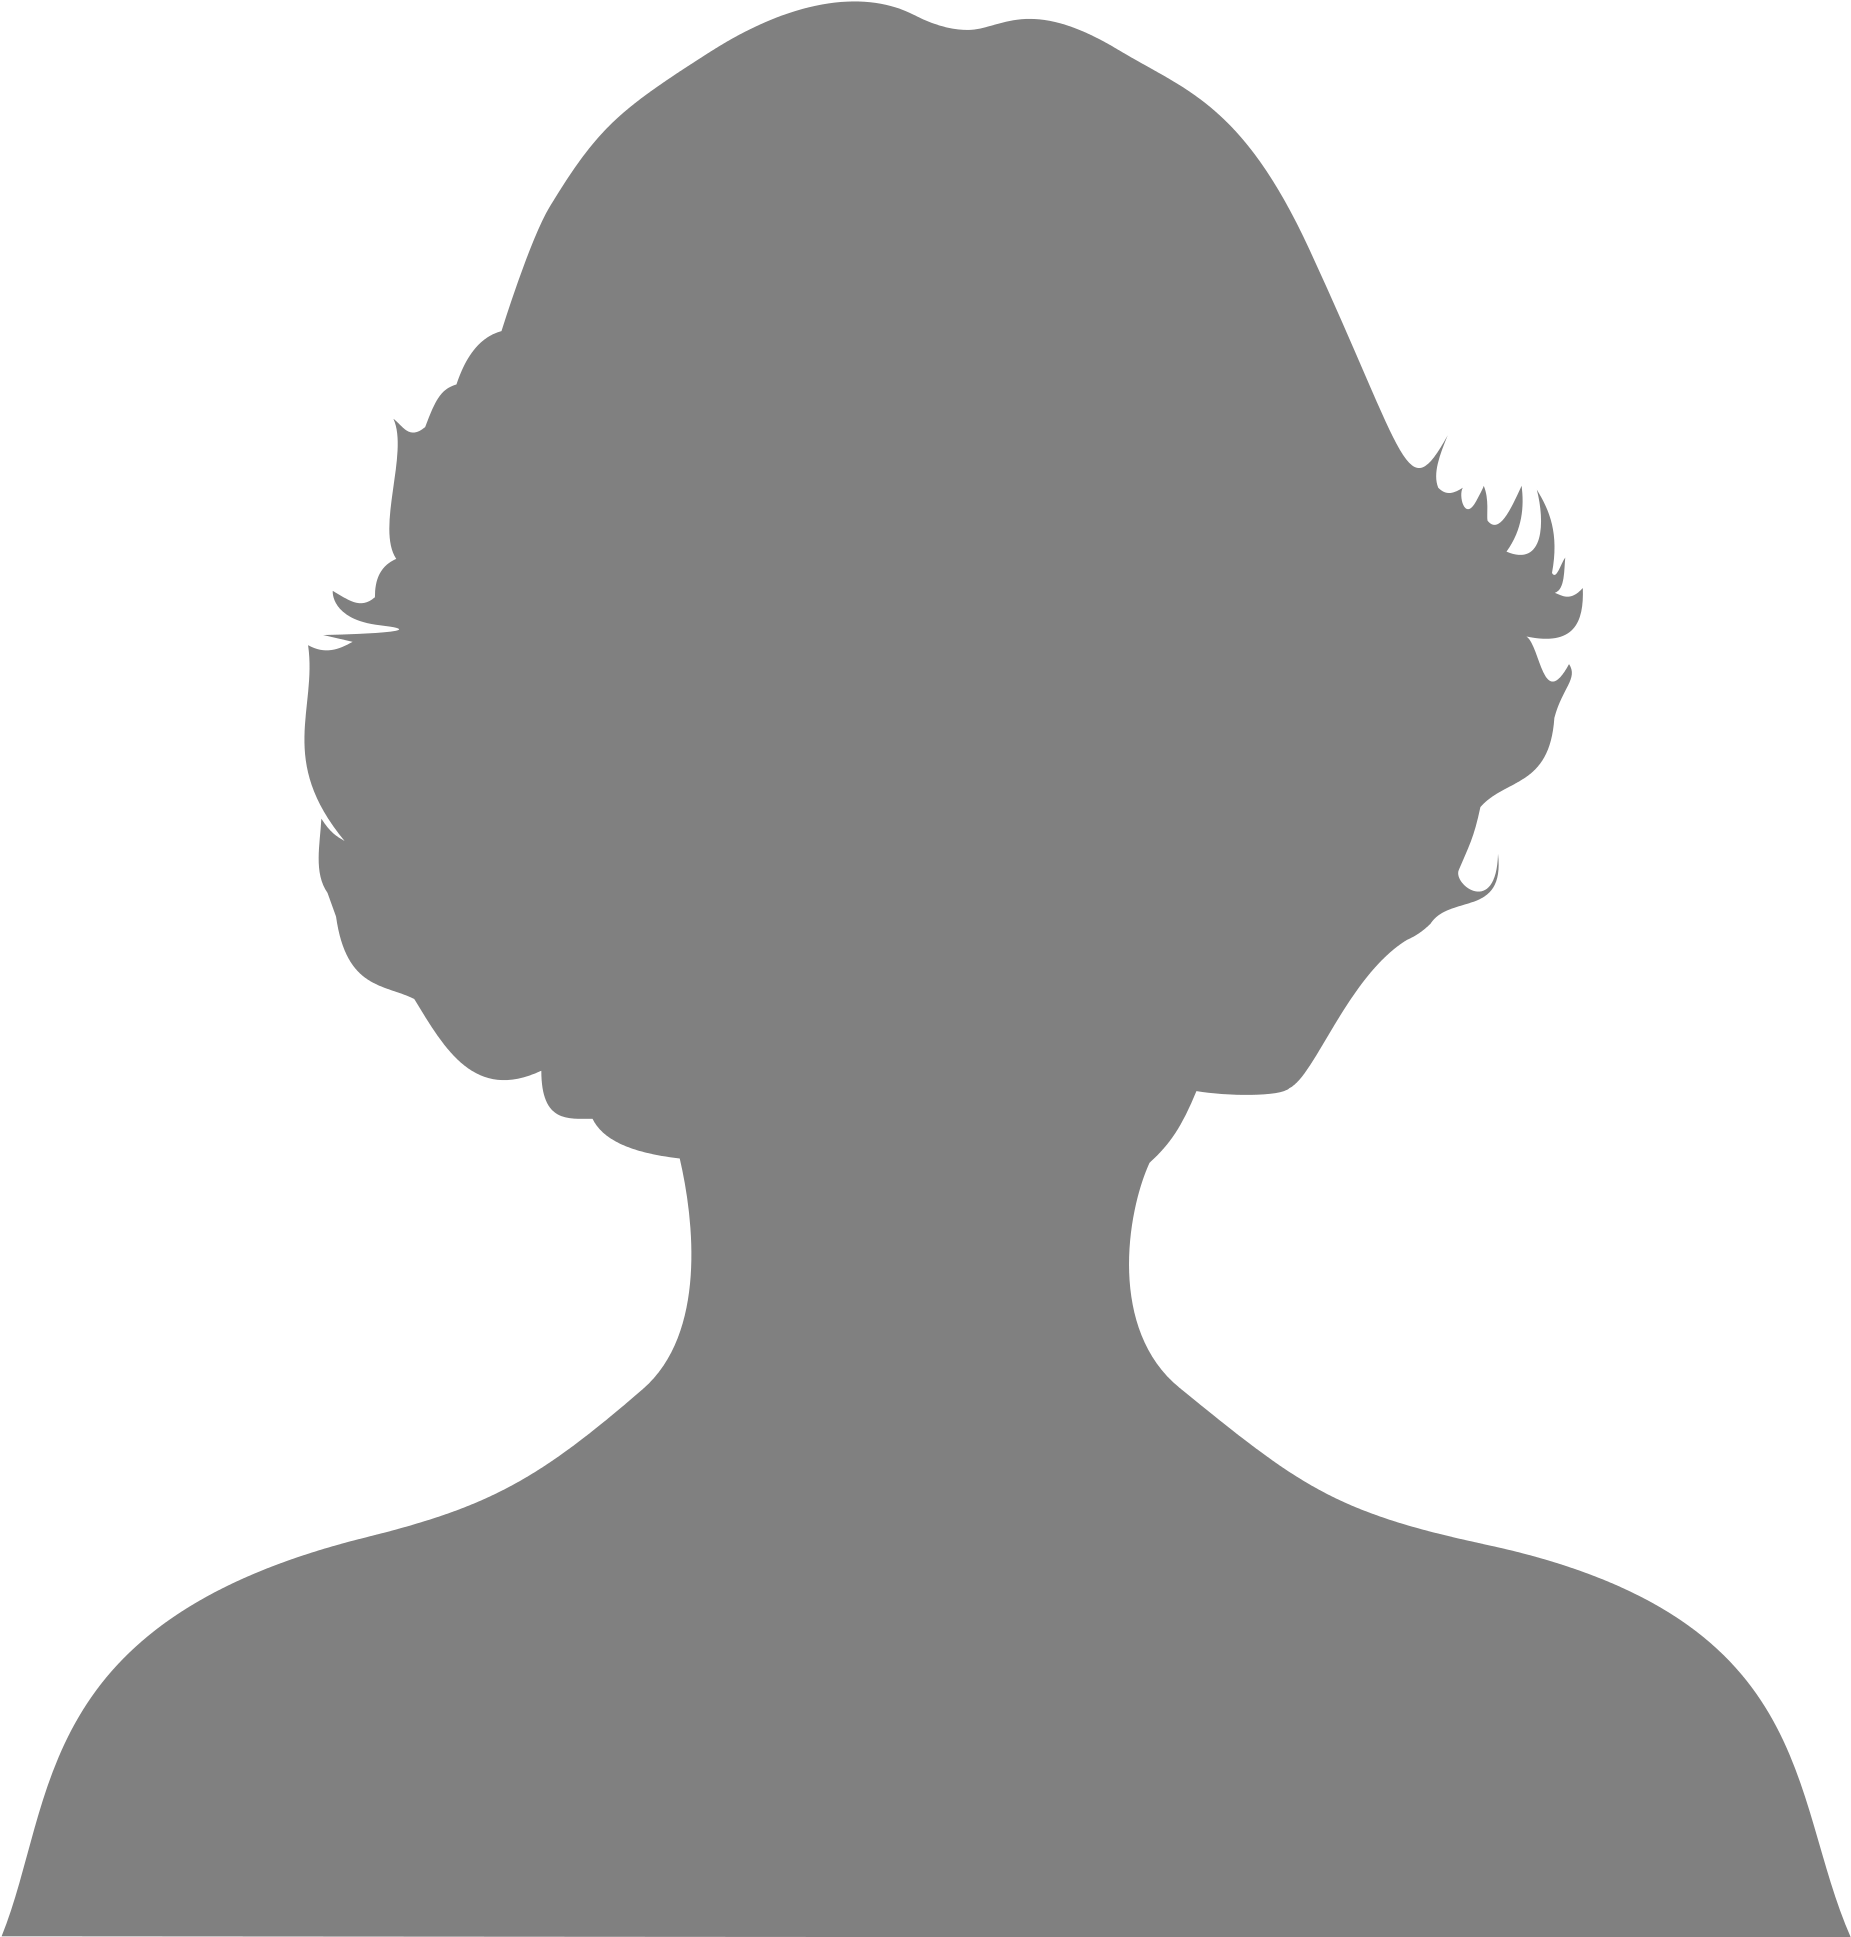 80-805275_blank-facebook-profile-pic-female-portrait-silhouette-clipart